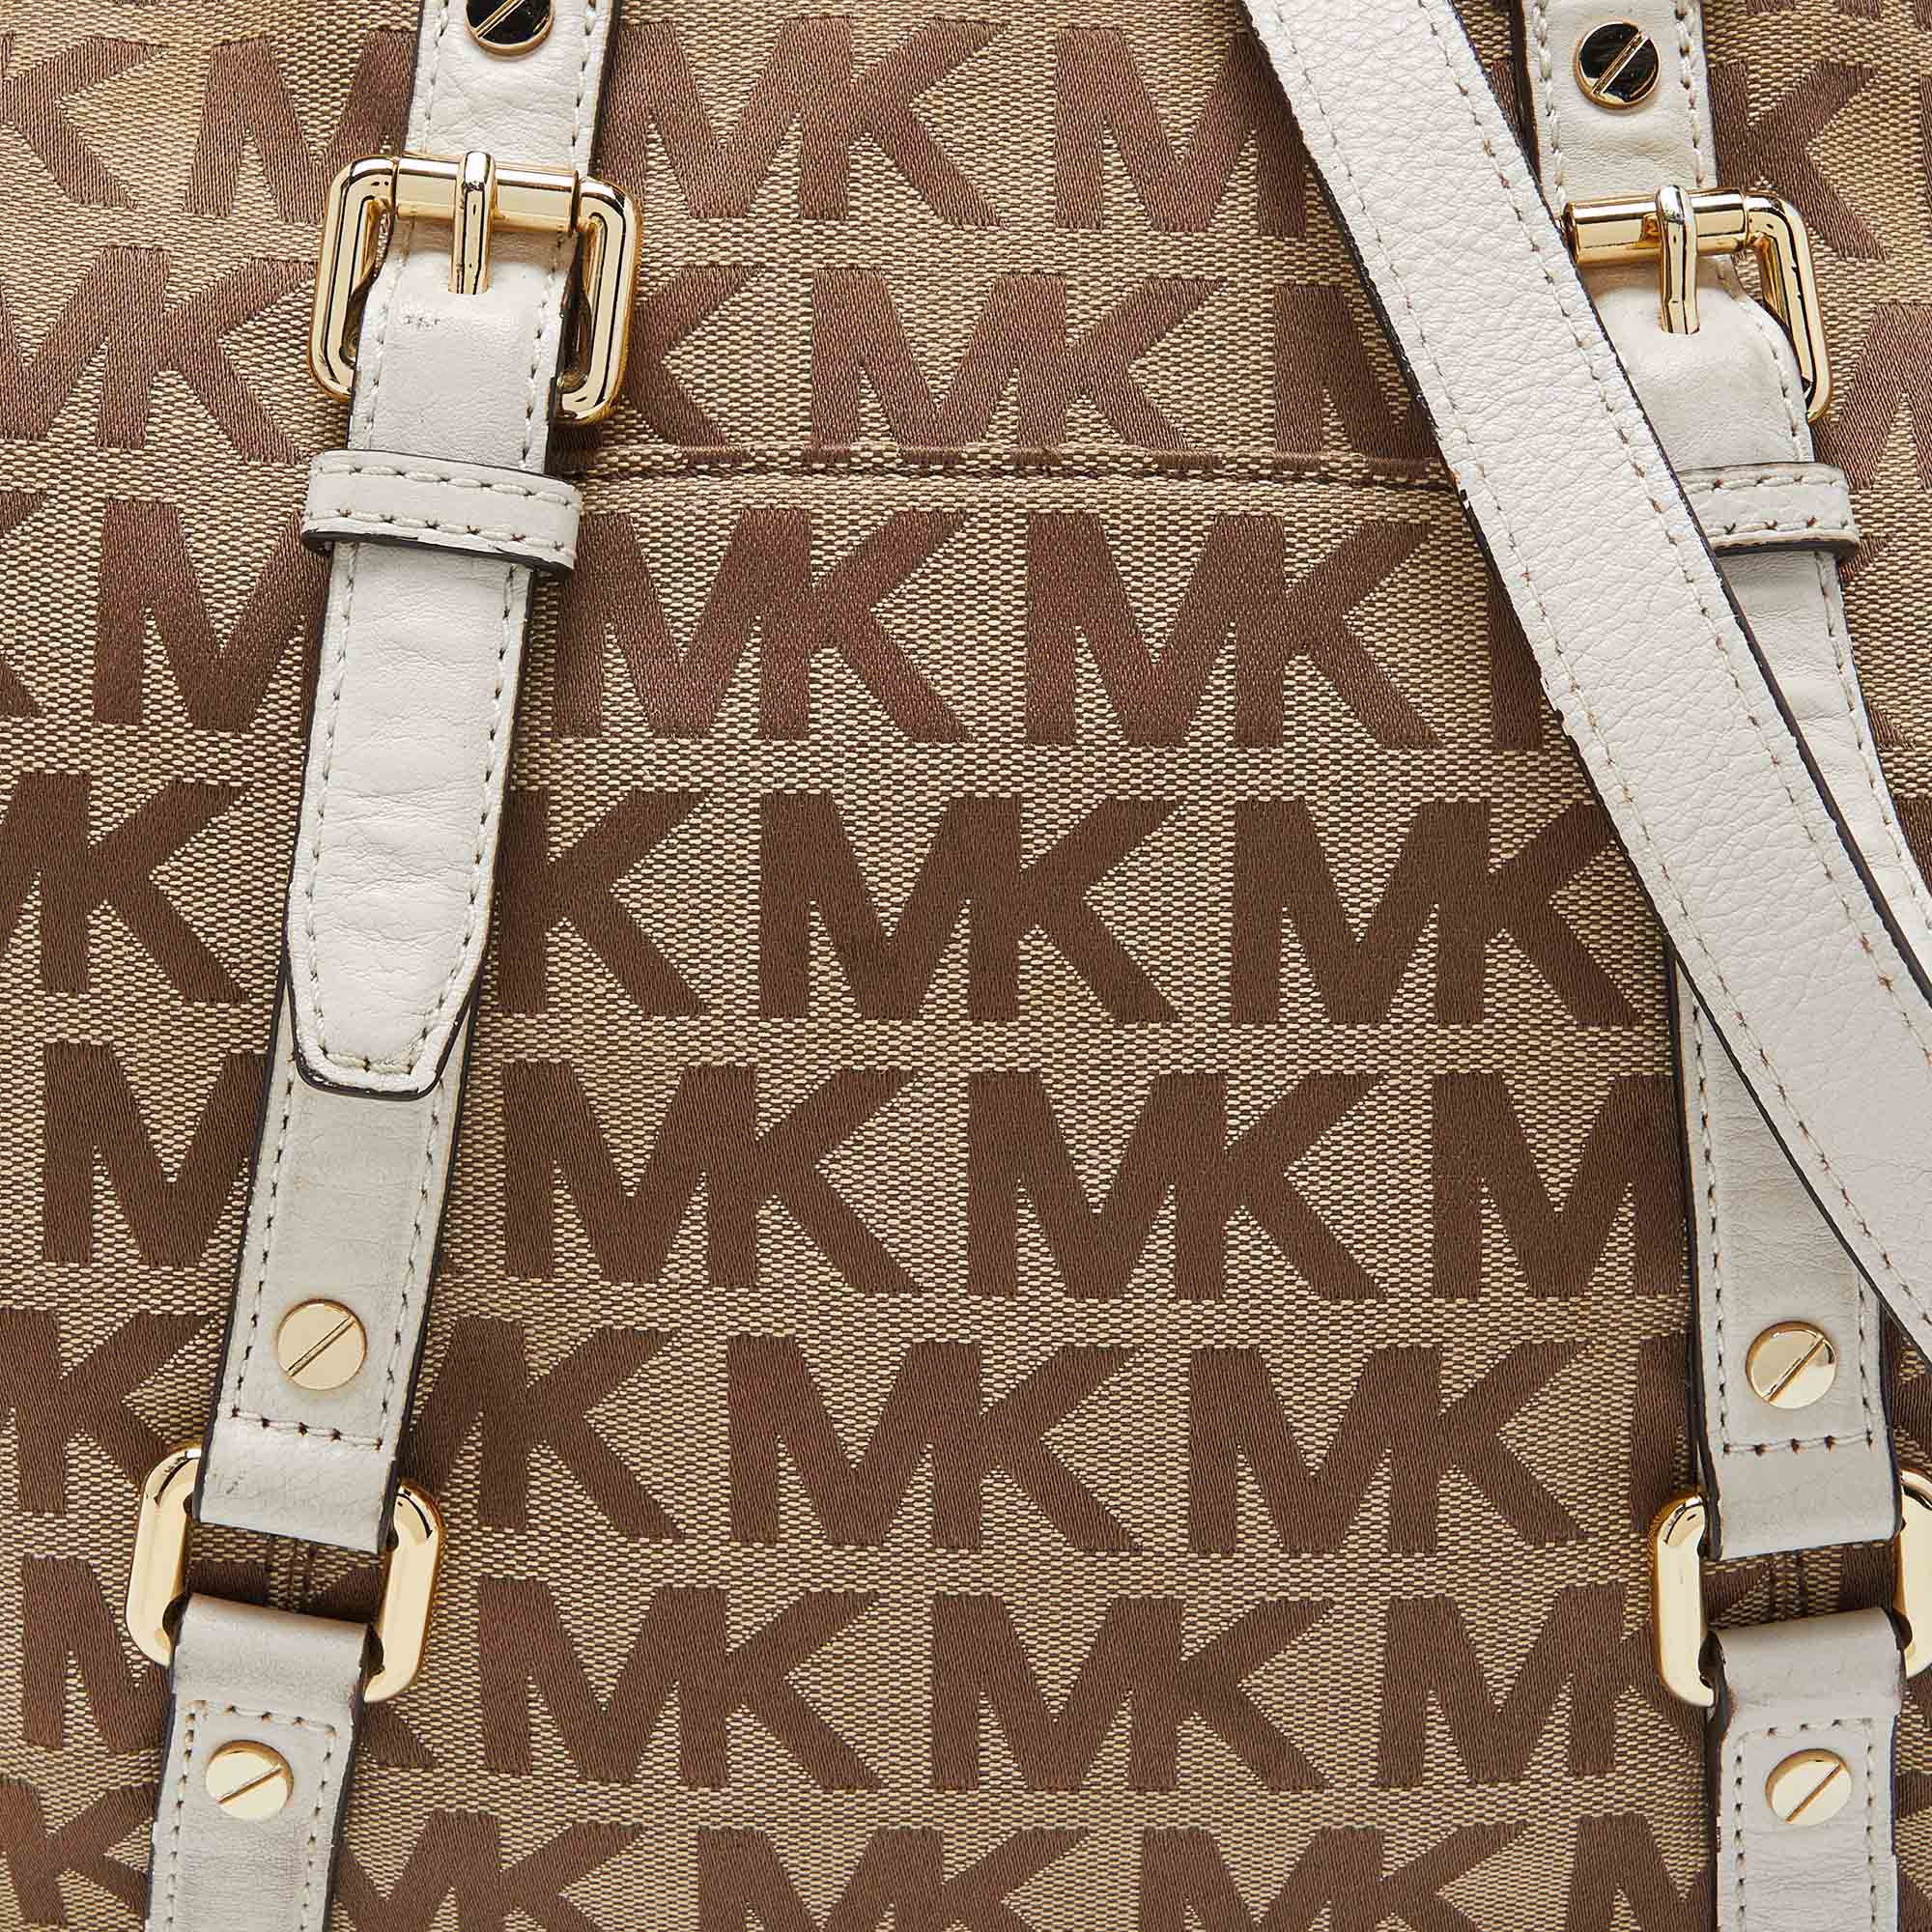 MICHAEL Michael Kors Beige/White GG Canvas And Leather Bedford Belted Shoulder Bag